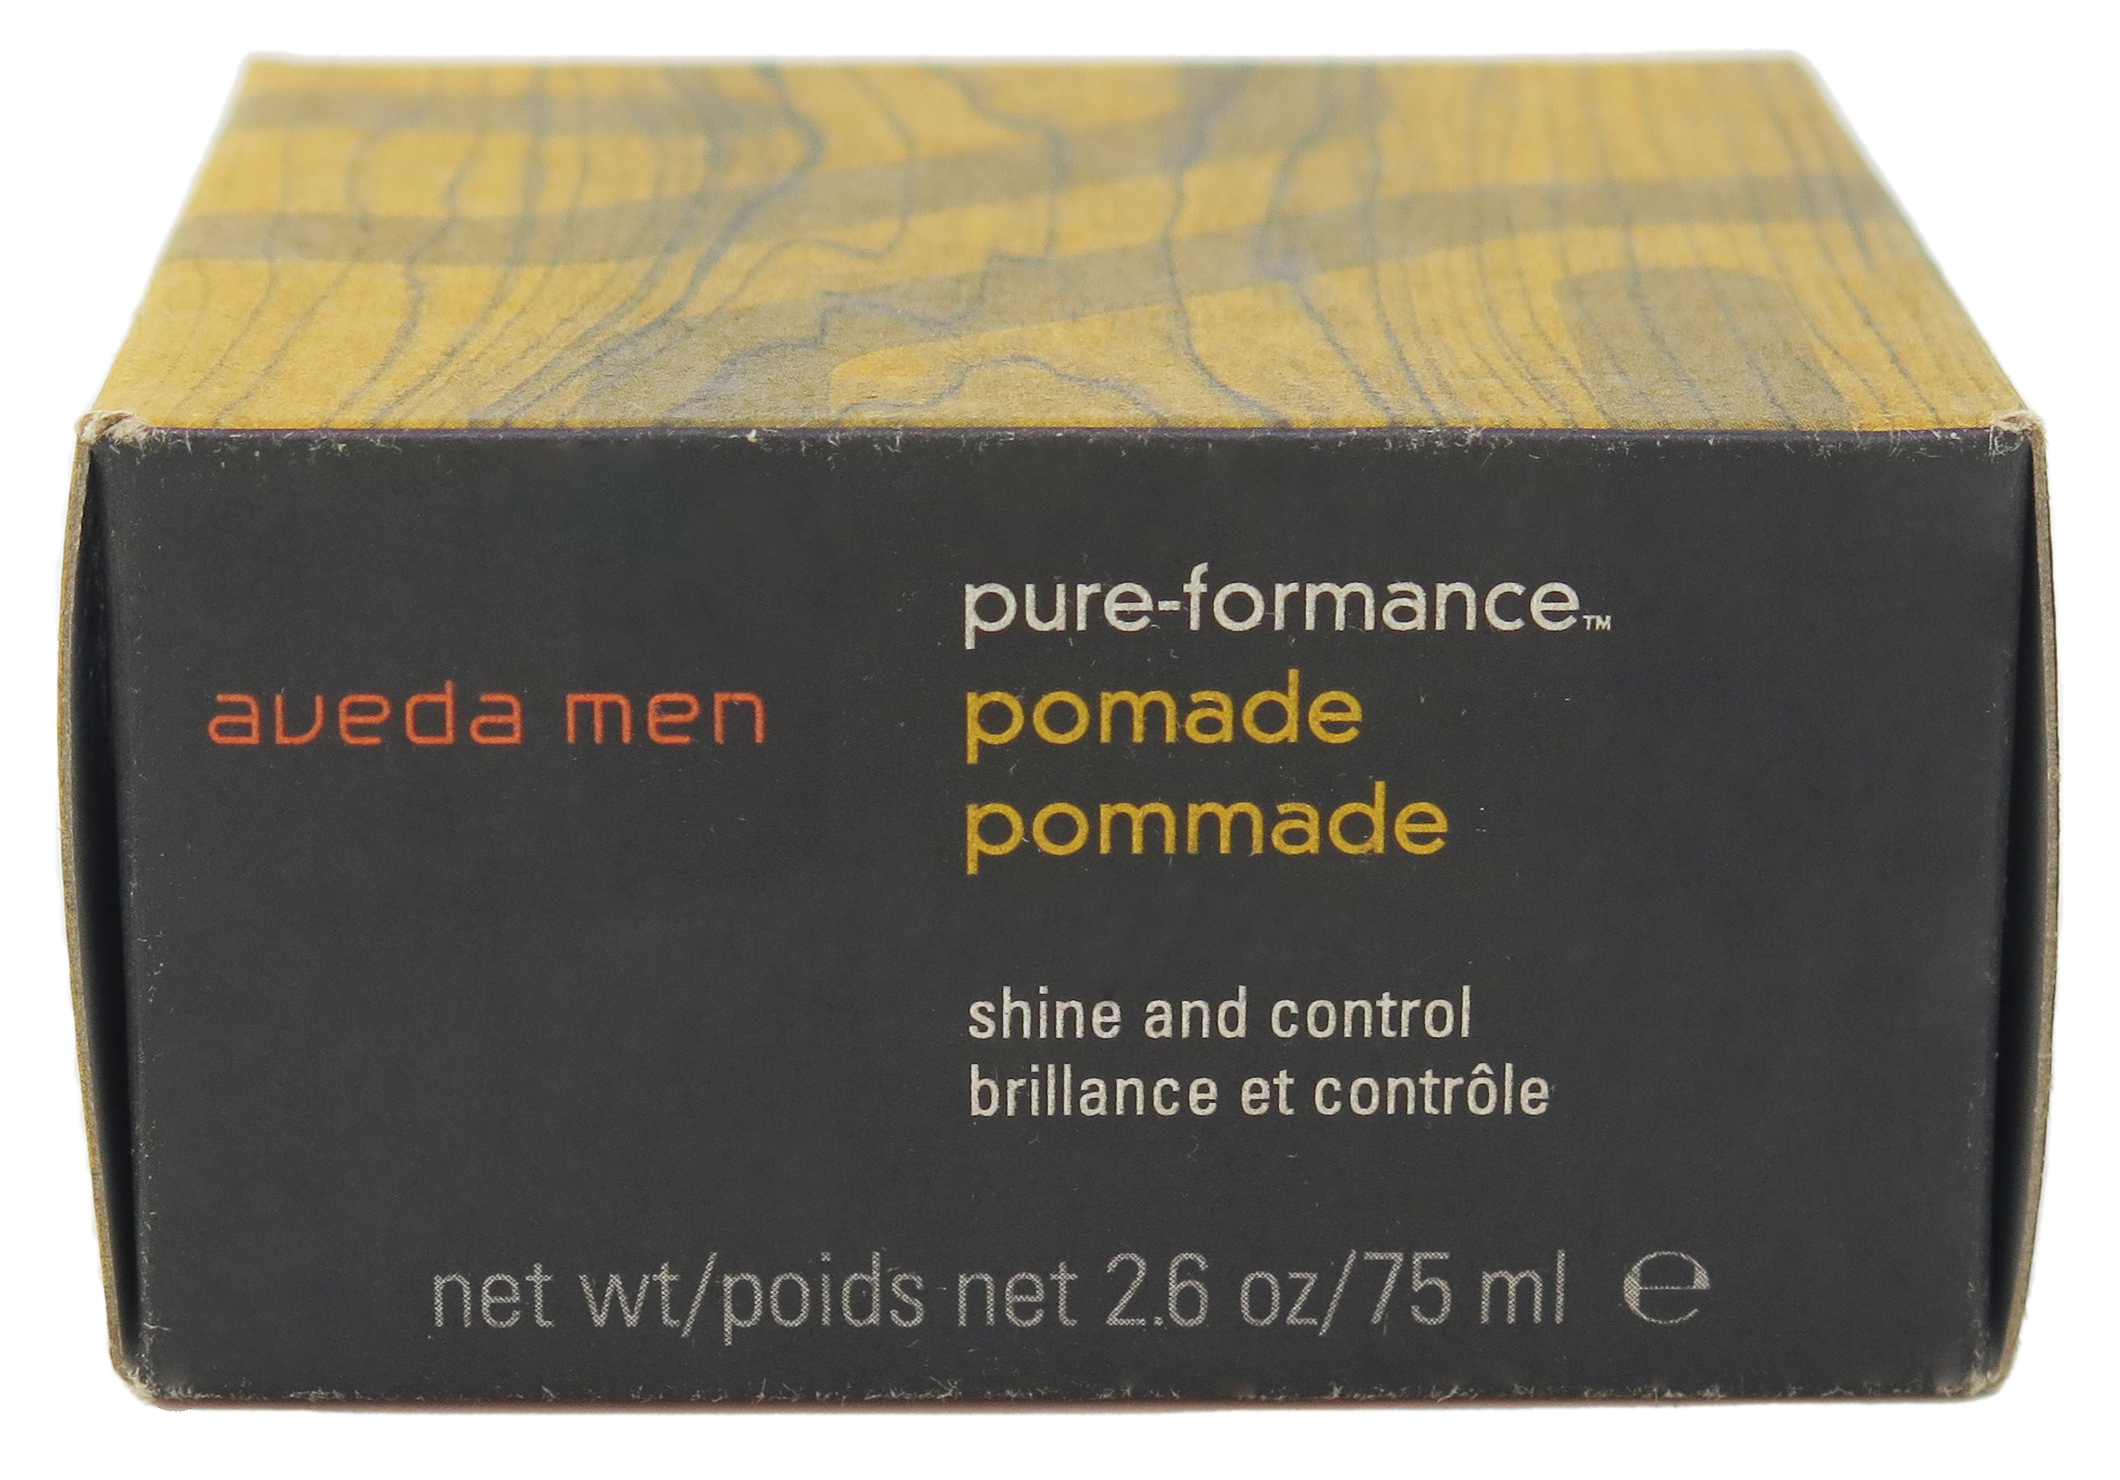 Aveda Men Pure-Formance Pomade 2.6 oz